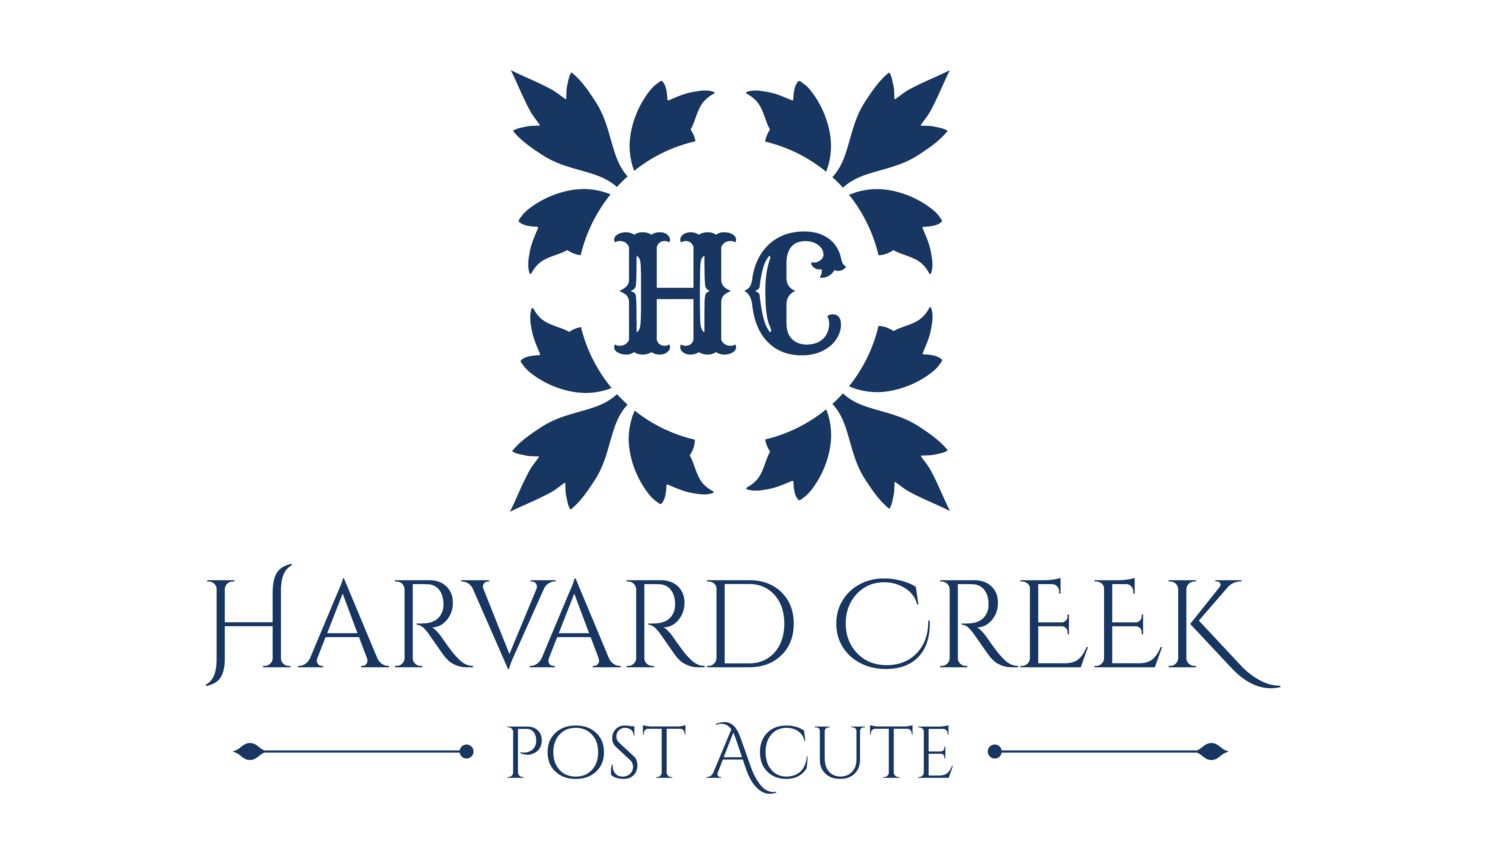 Harvard Creek Post Acute